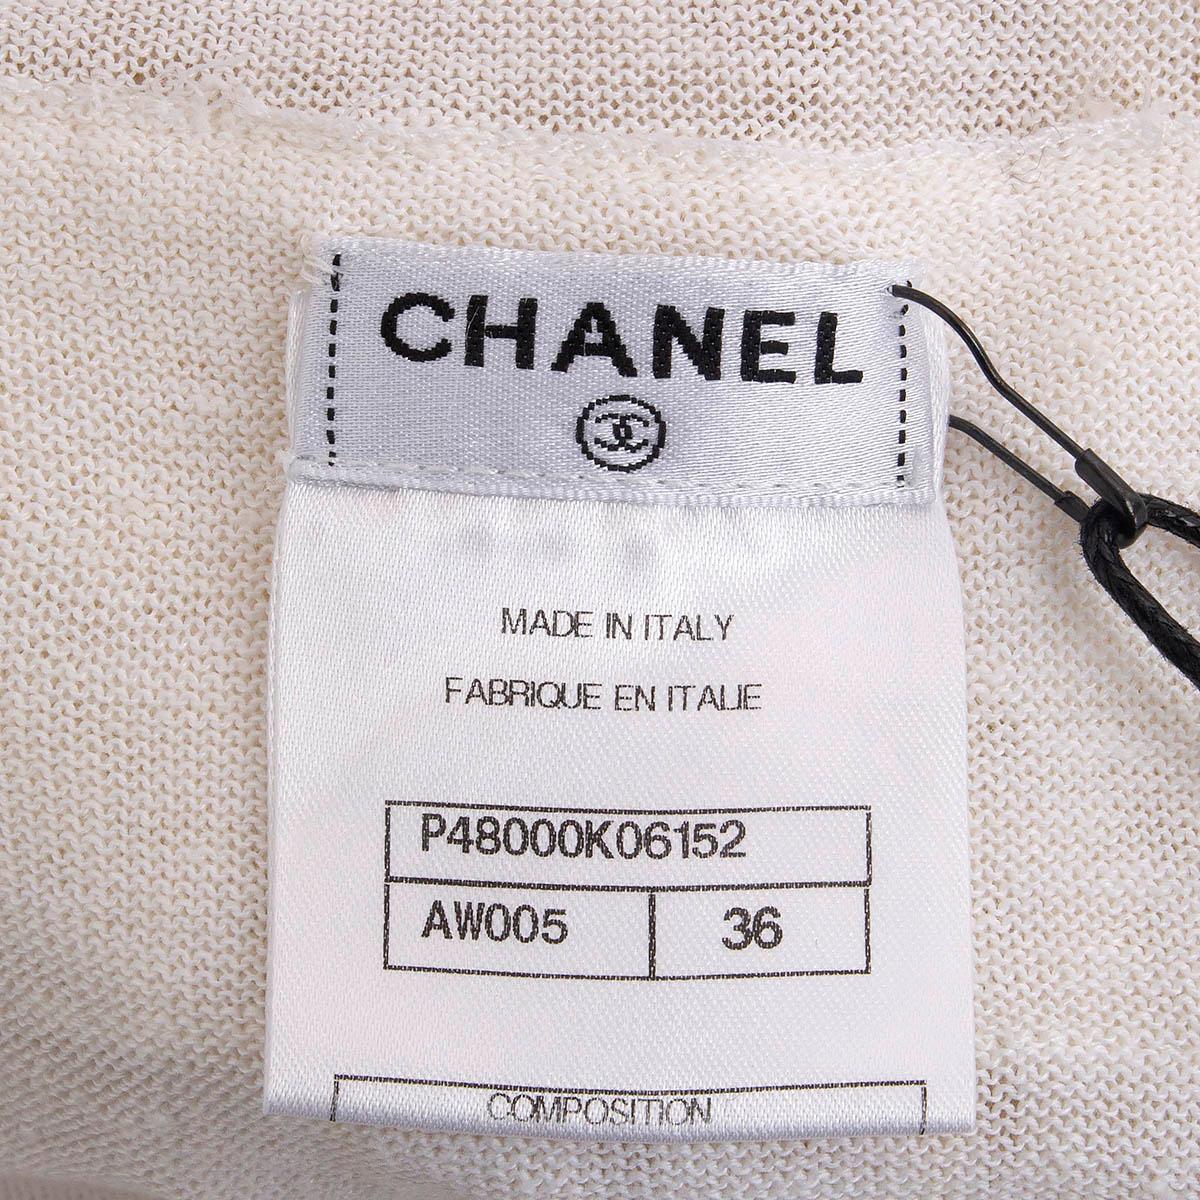 CHANEL ivory linen 2014 14P RUFFLED TIERED KNIT Dress 36 XS 4